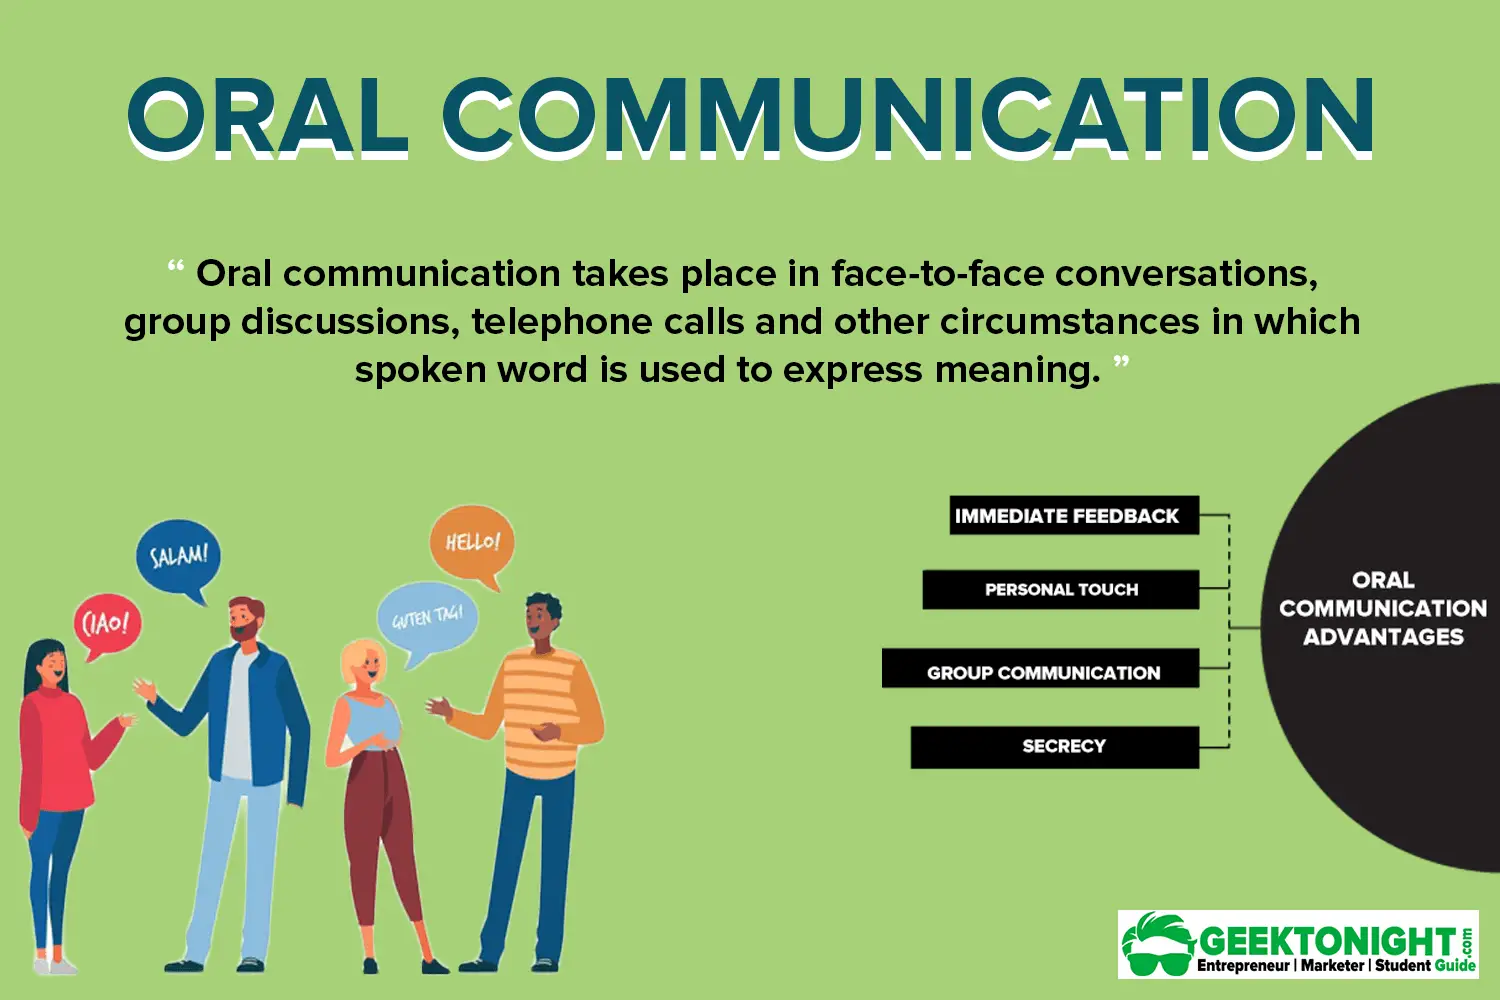 intrapersonal communication skills pdf